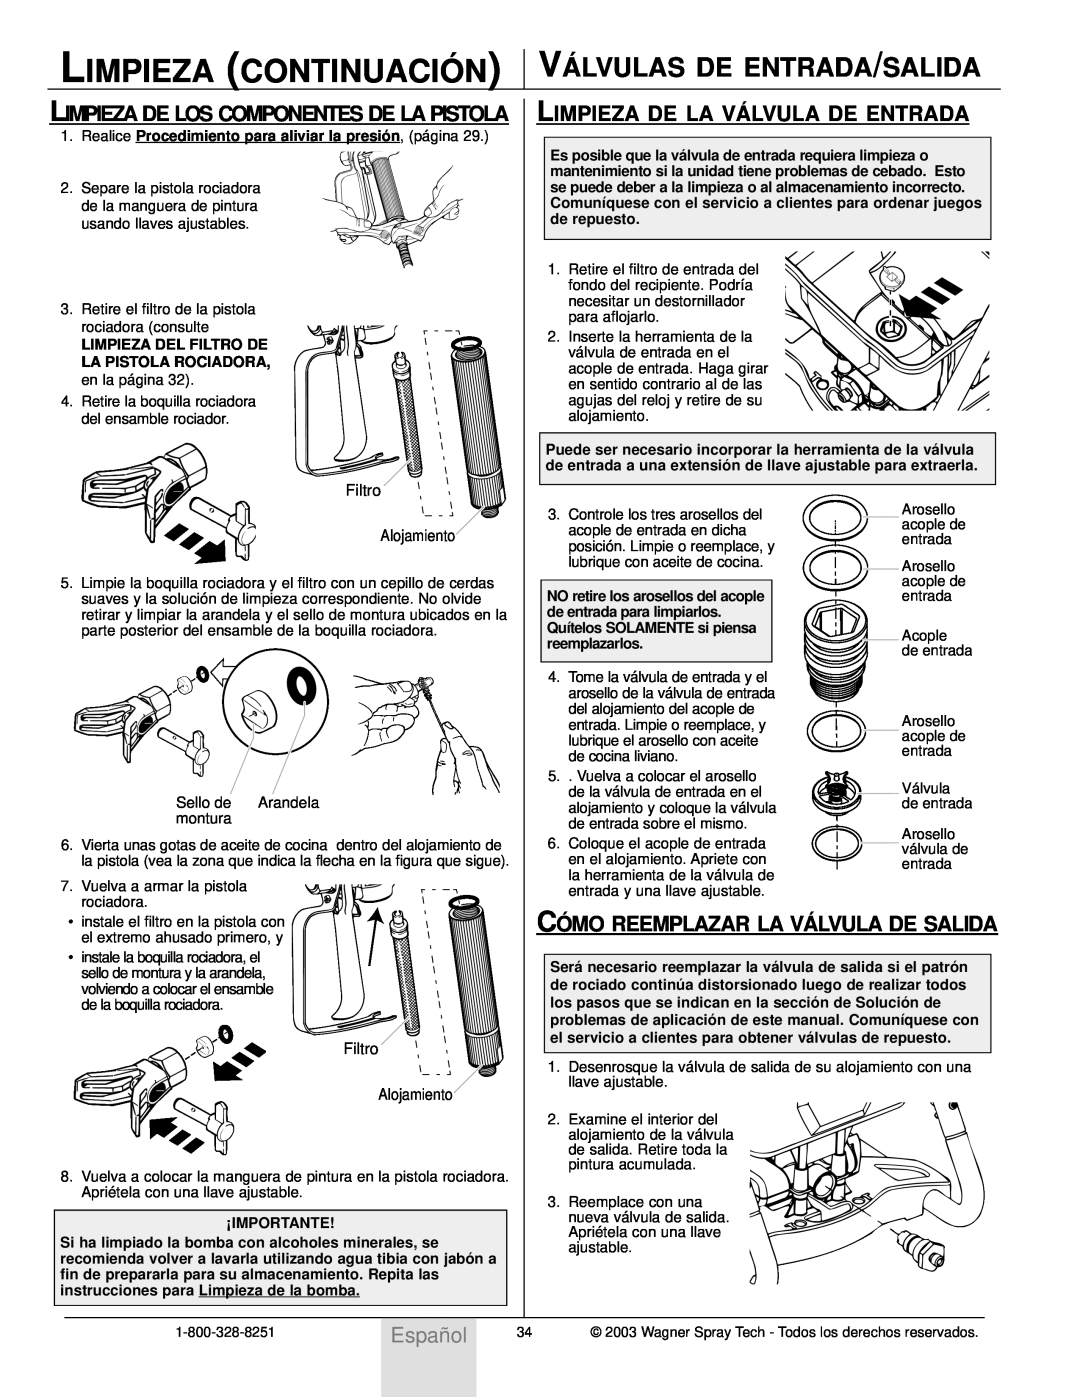 Wagner SprayTech HIGH PERFORMANCE AIRLESS SPRAYER owner manual Limpieza Continuació N, Vá Lvulas De Entrada/Salida, Español 